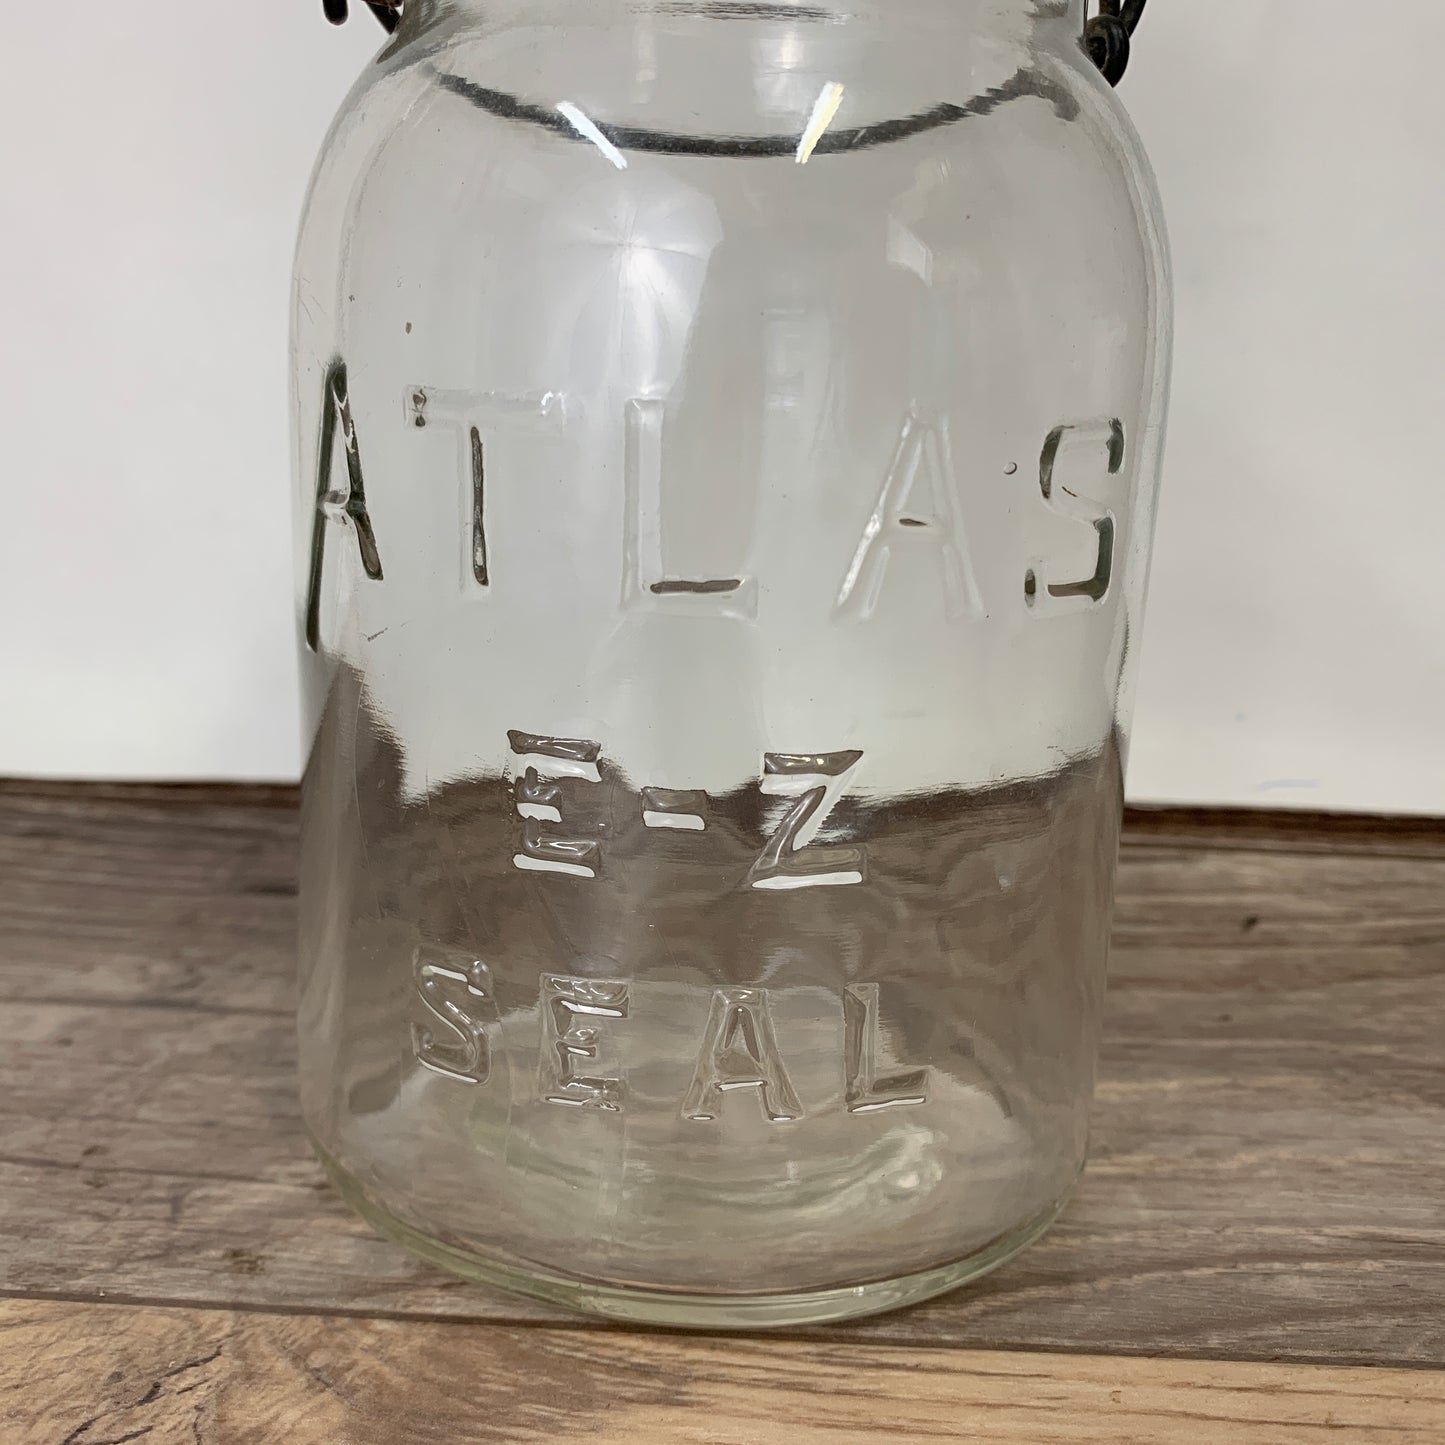 Atlas E-Z Seal Canning Jar, Bail Top Stash Jar